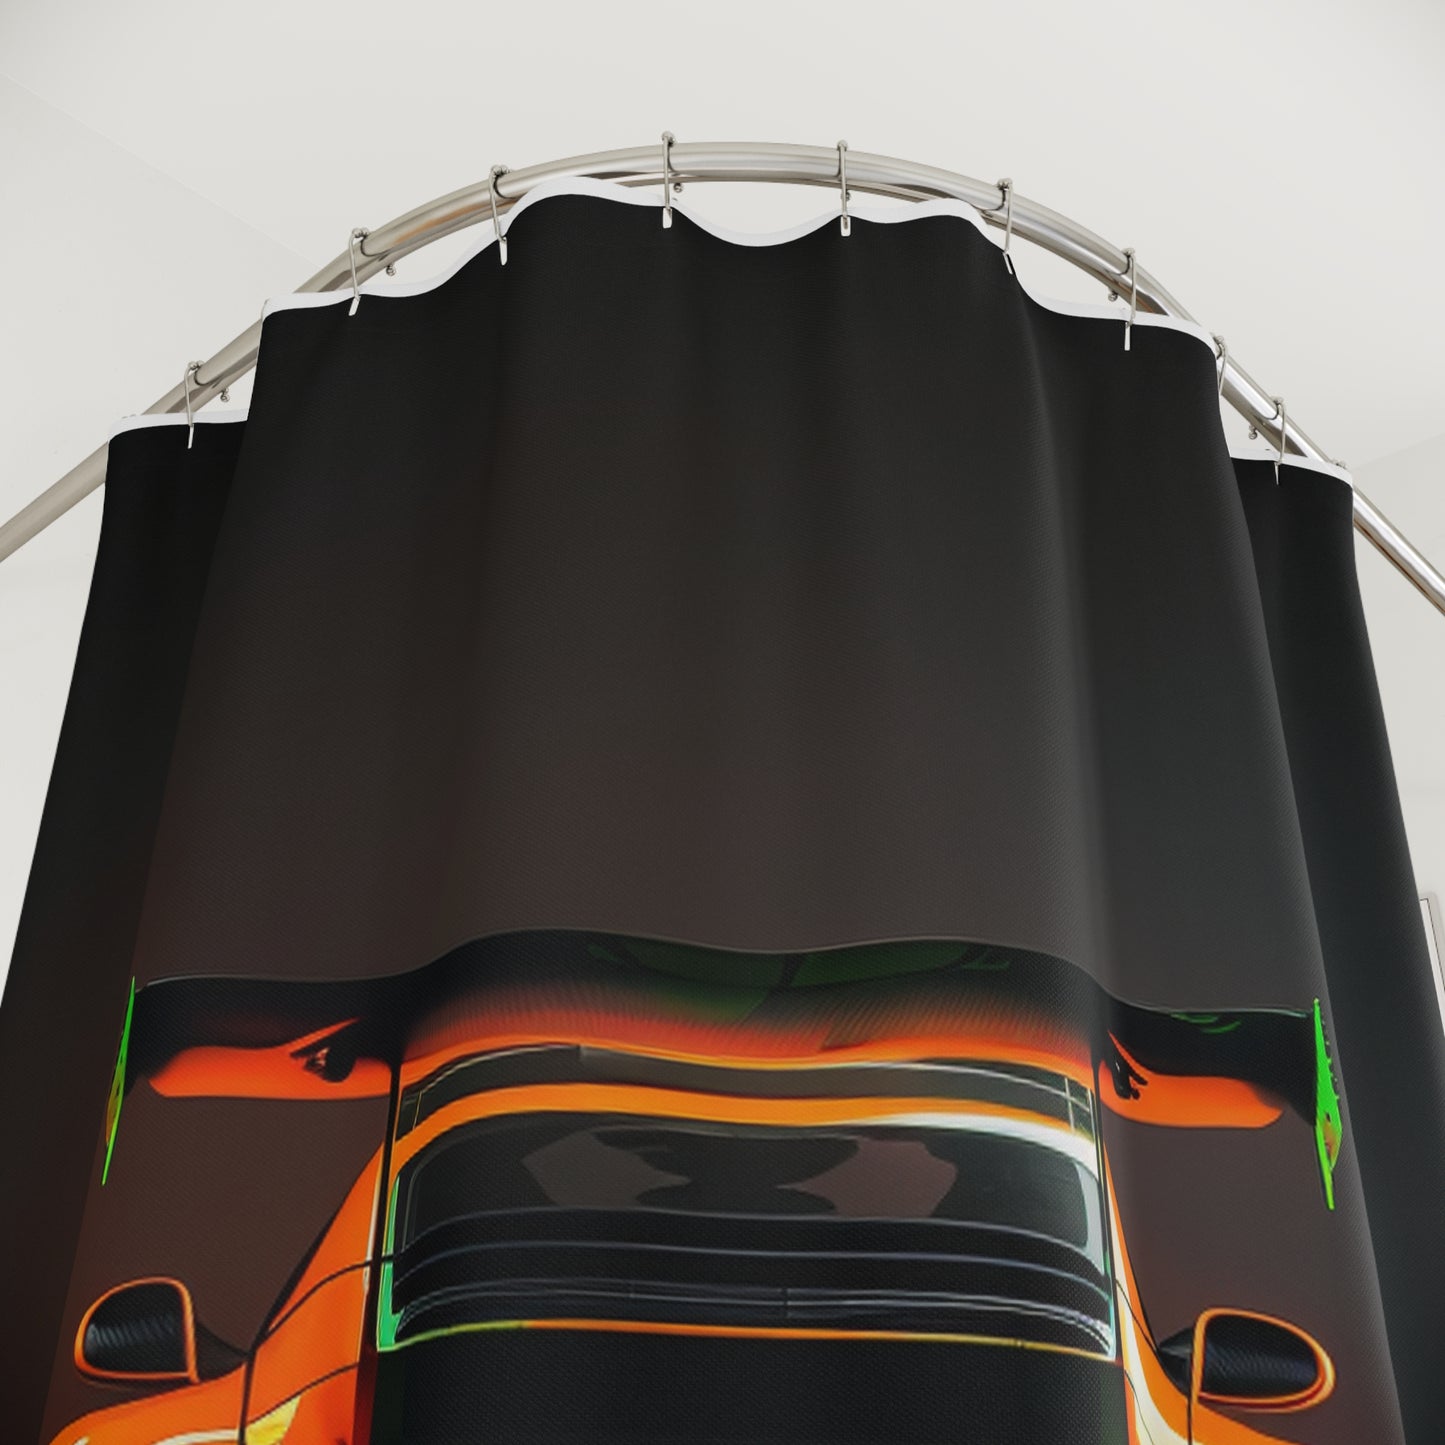 Polyester Shower Curtain Porsche Color 3